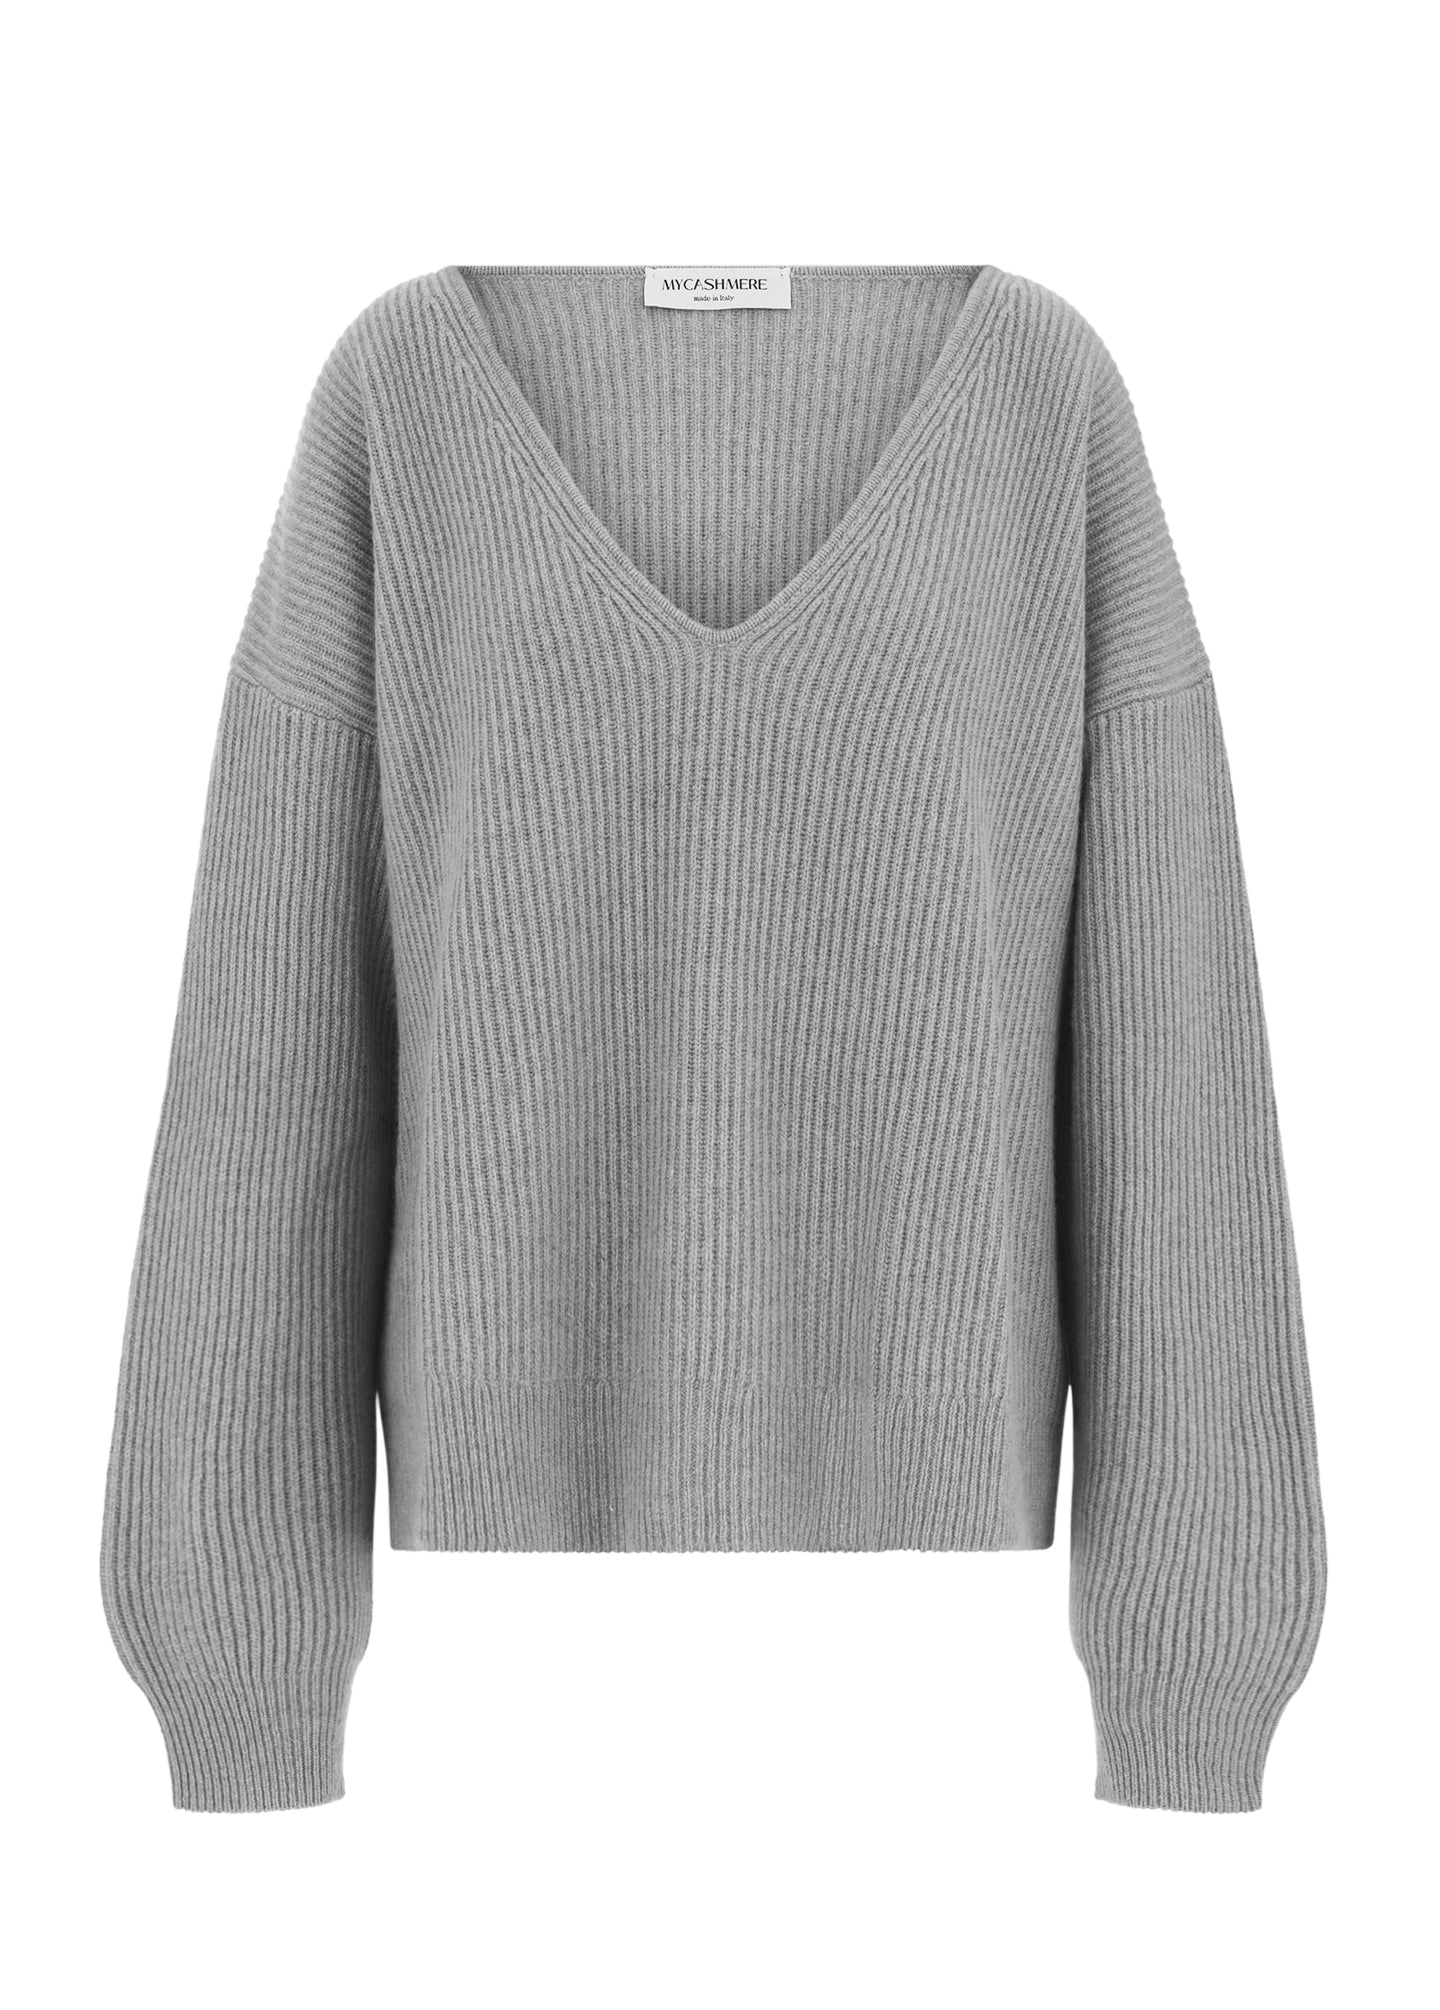 Women's cashmere V neck oversize jumper sweater grey